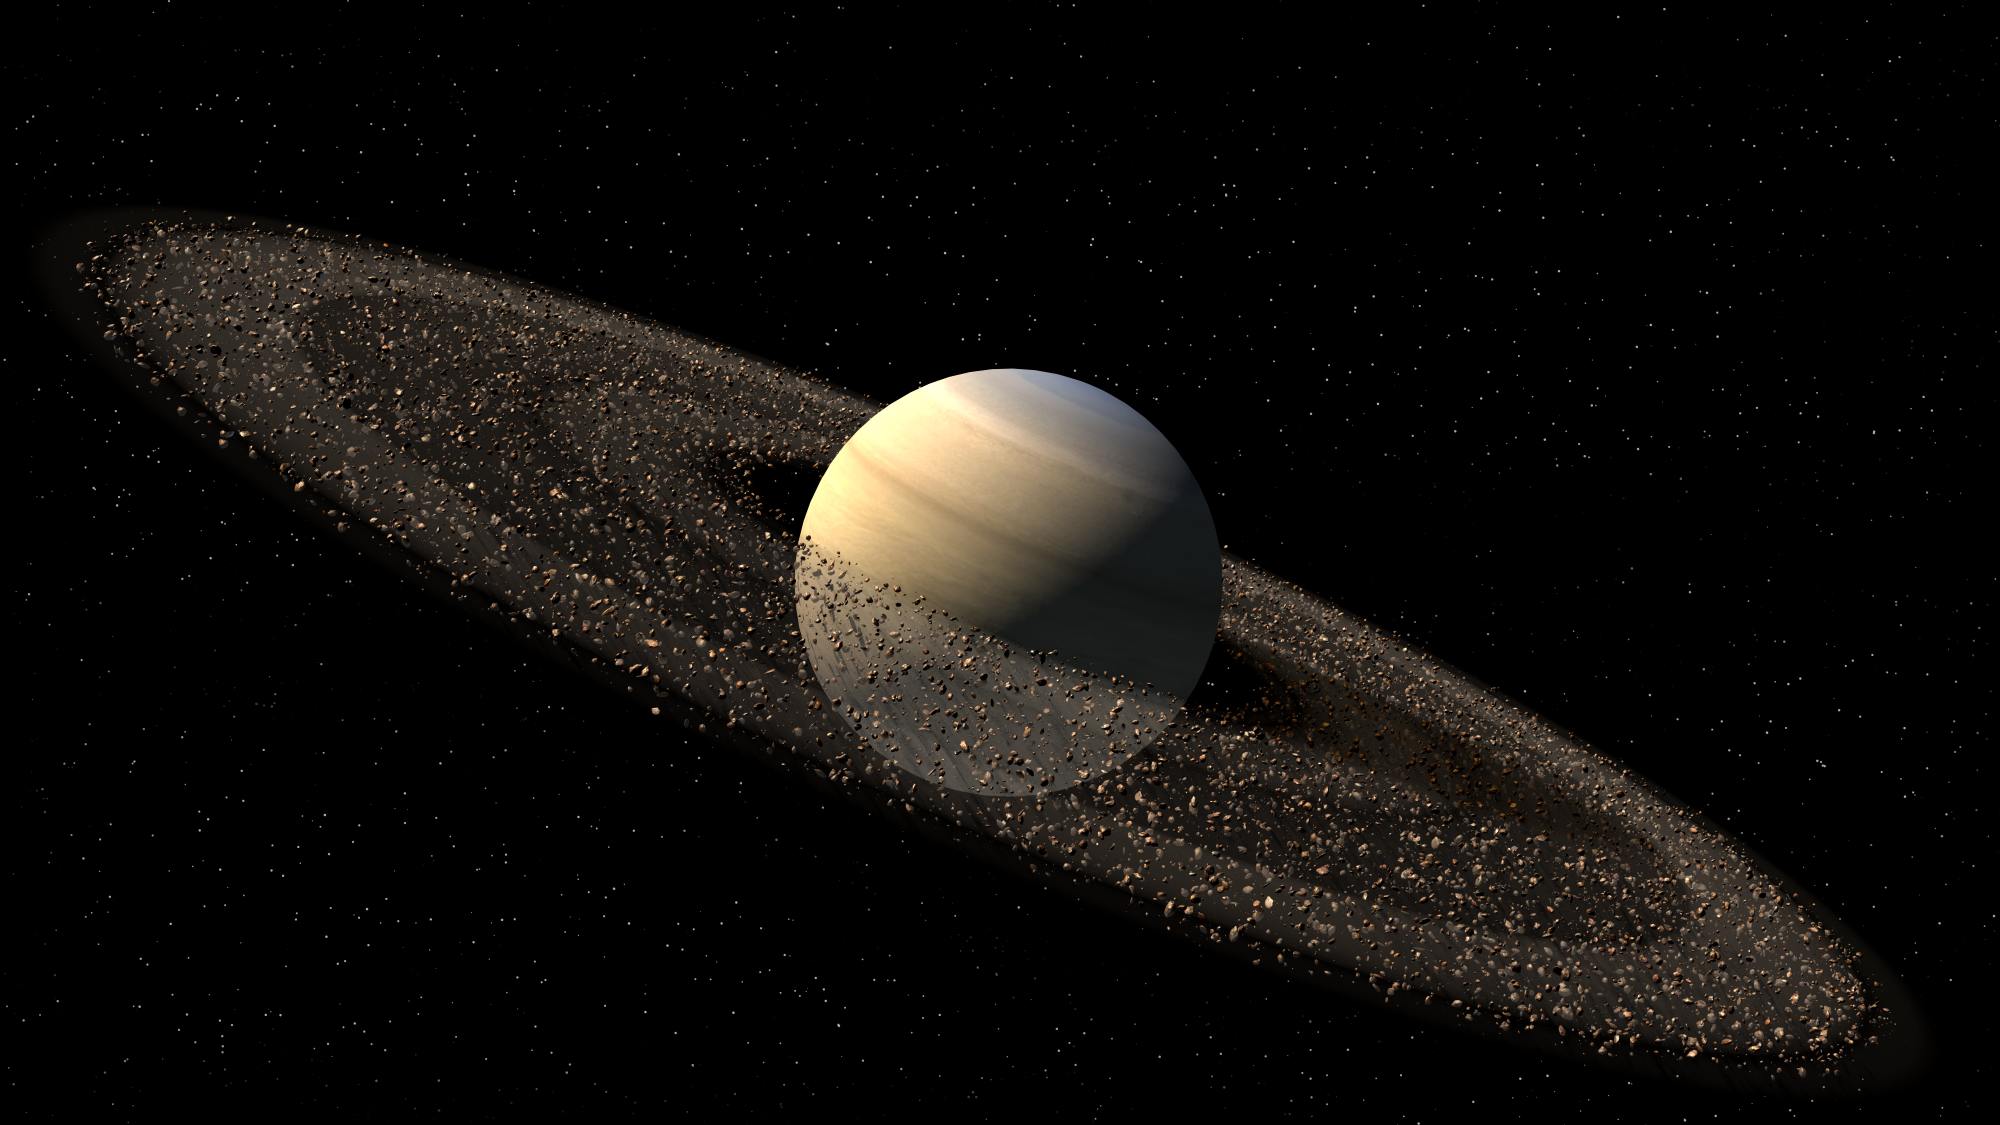 Иллюстрация планеты Сатурн с кольцами астероида. ©